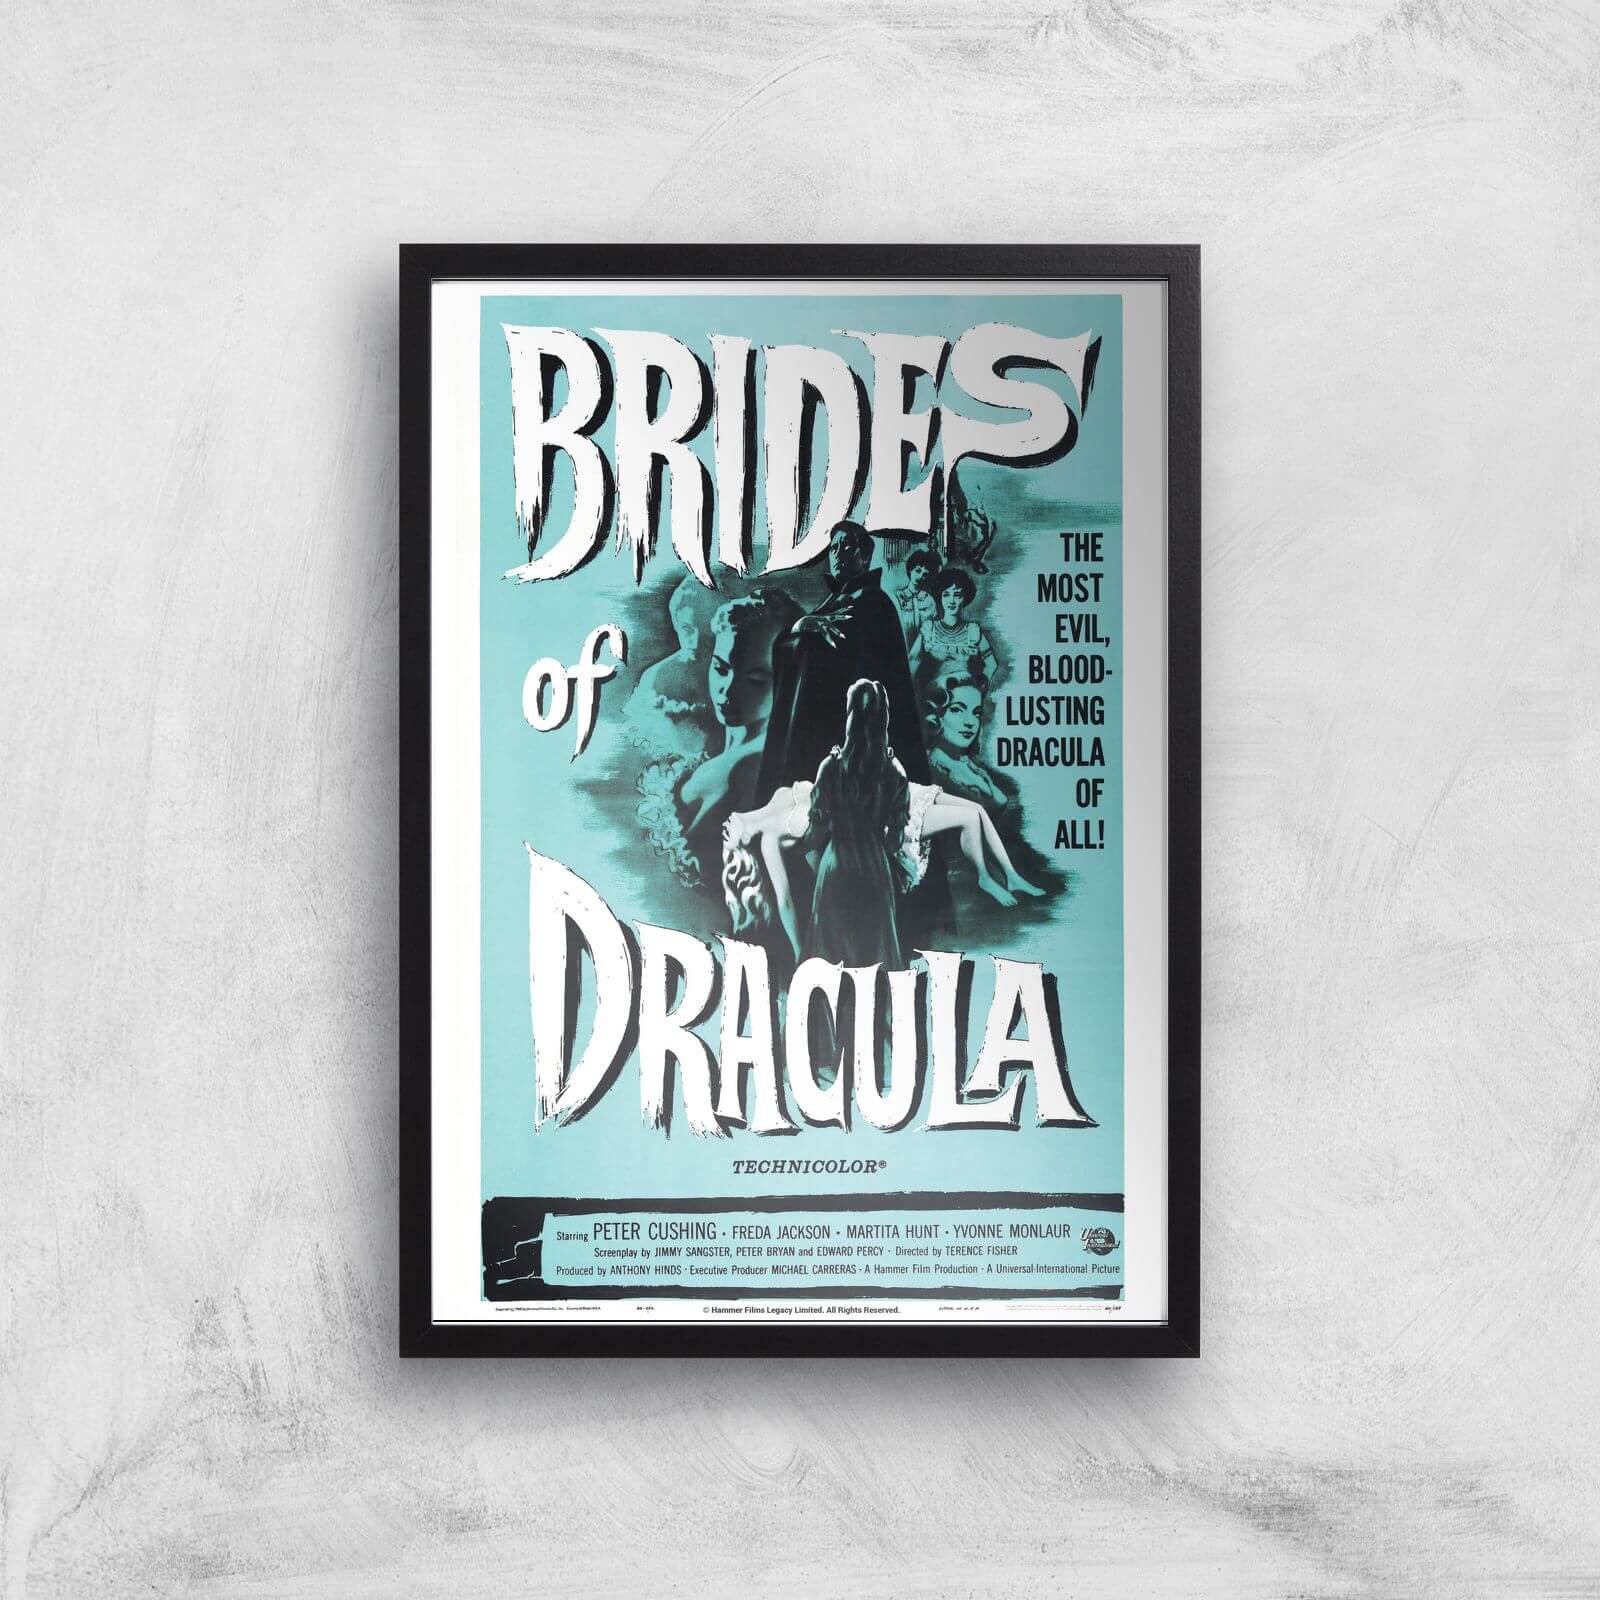 Brides Of Dracula Giclee Art Print - A2 - Black Frame